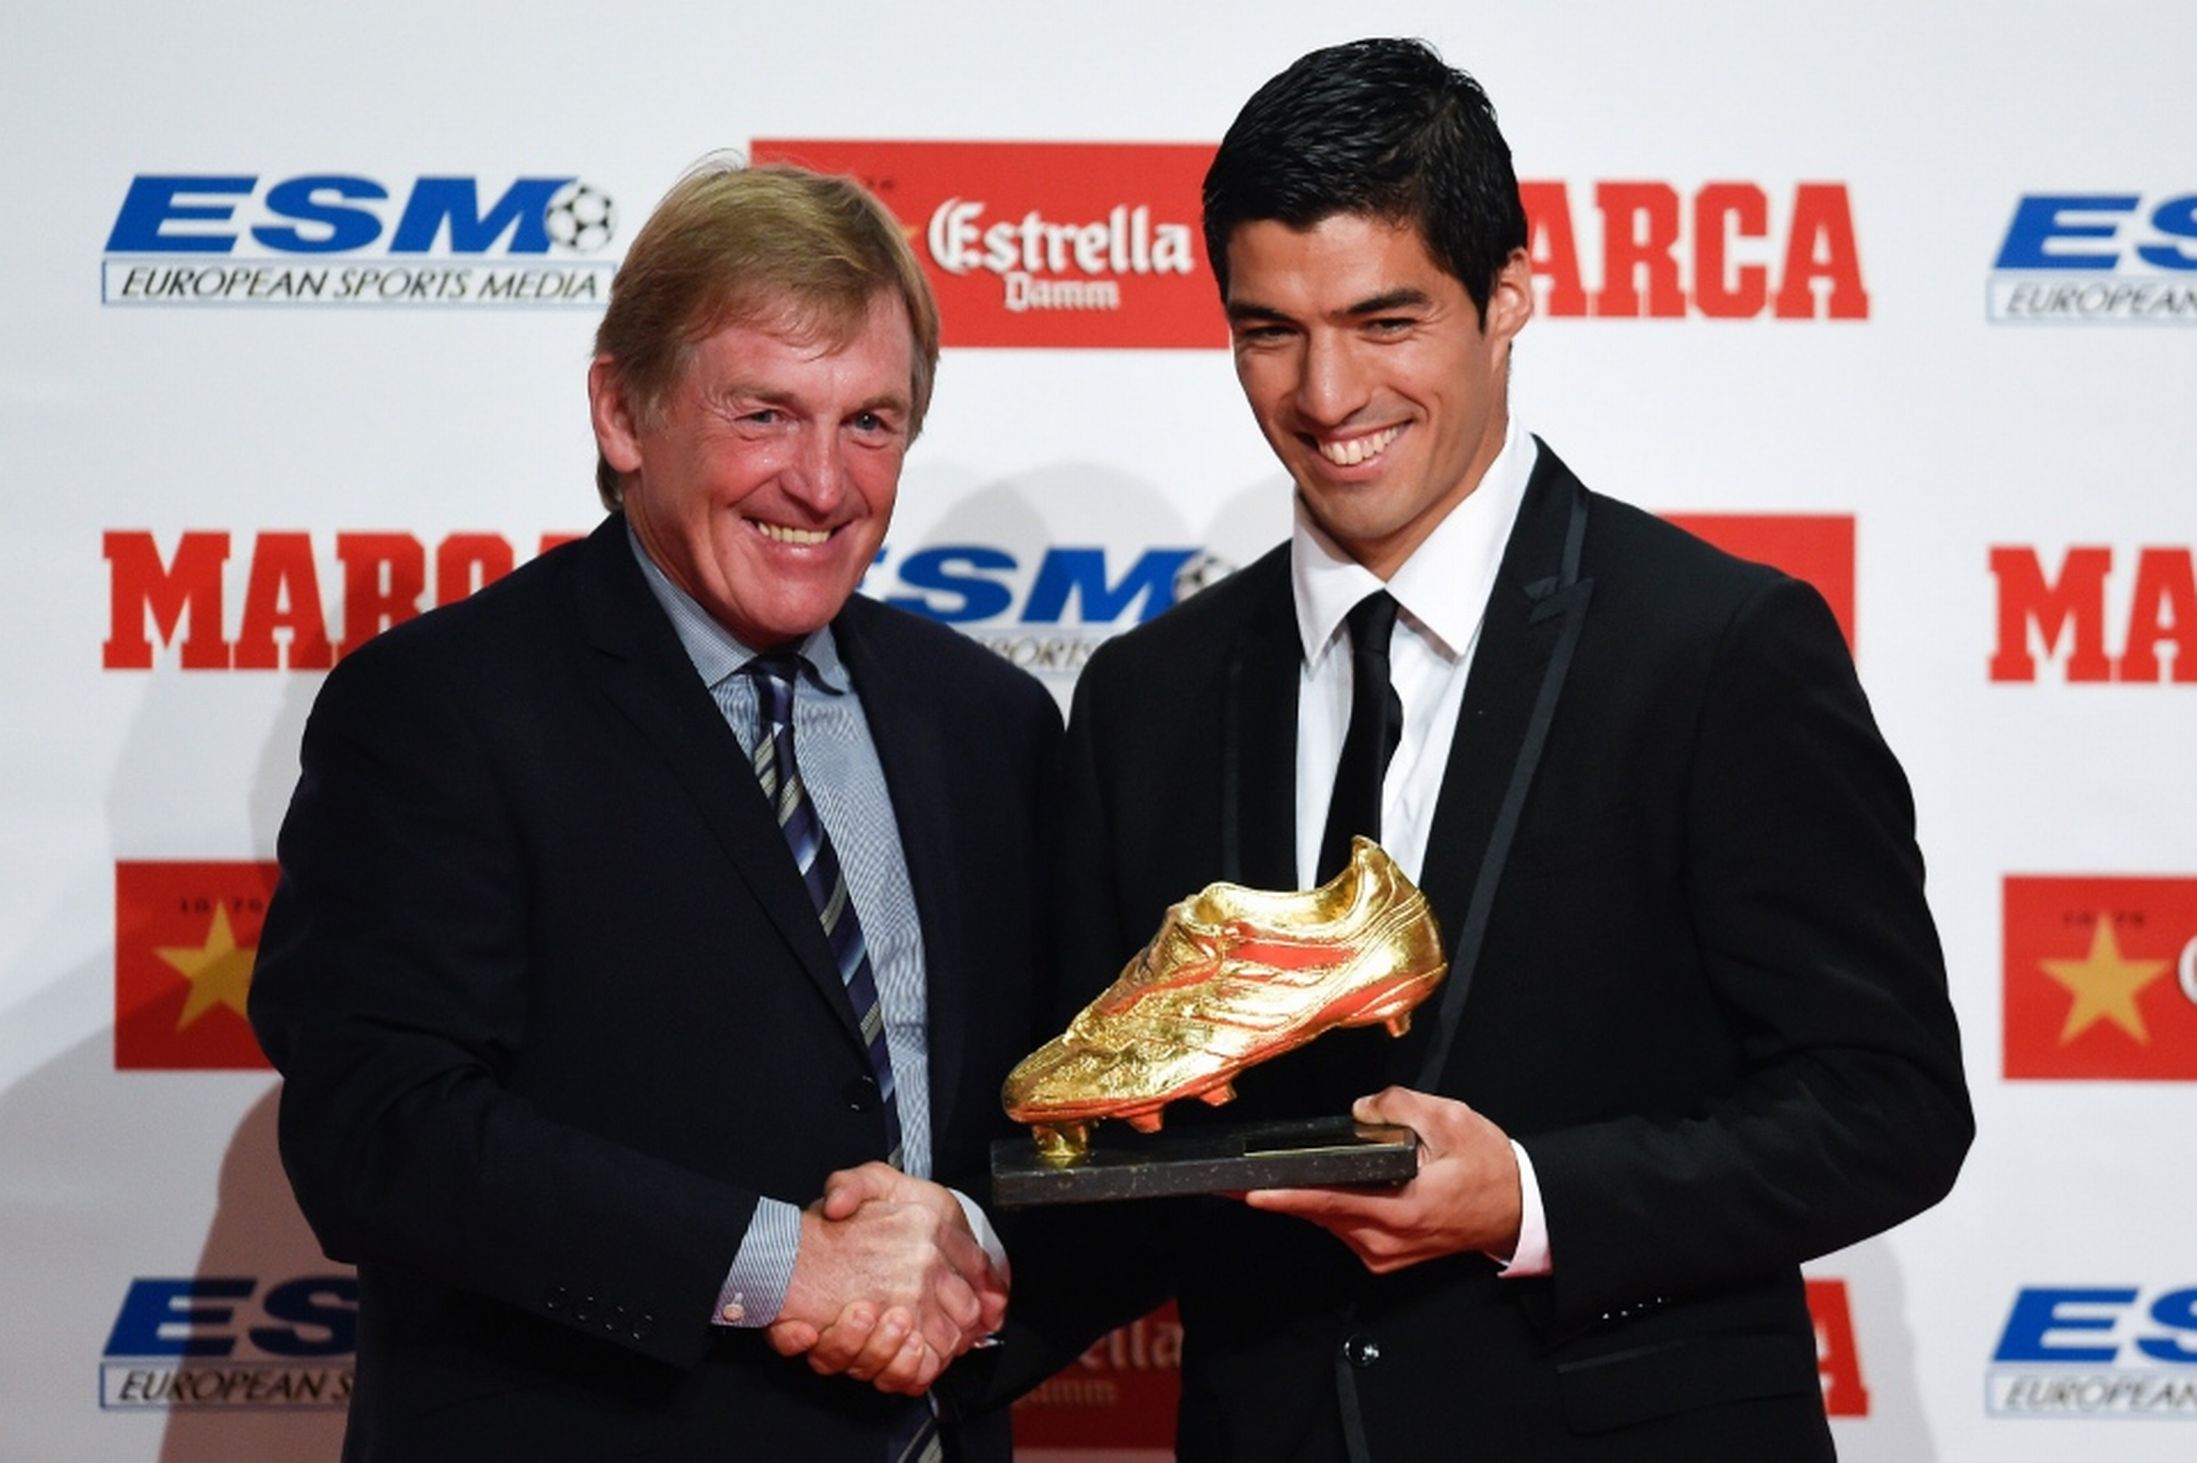 Luis-Suarez-Awarded-Golden-Boot